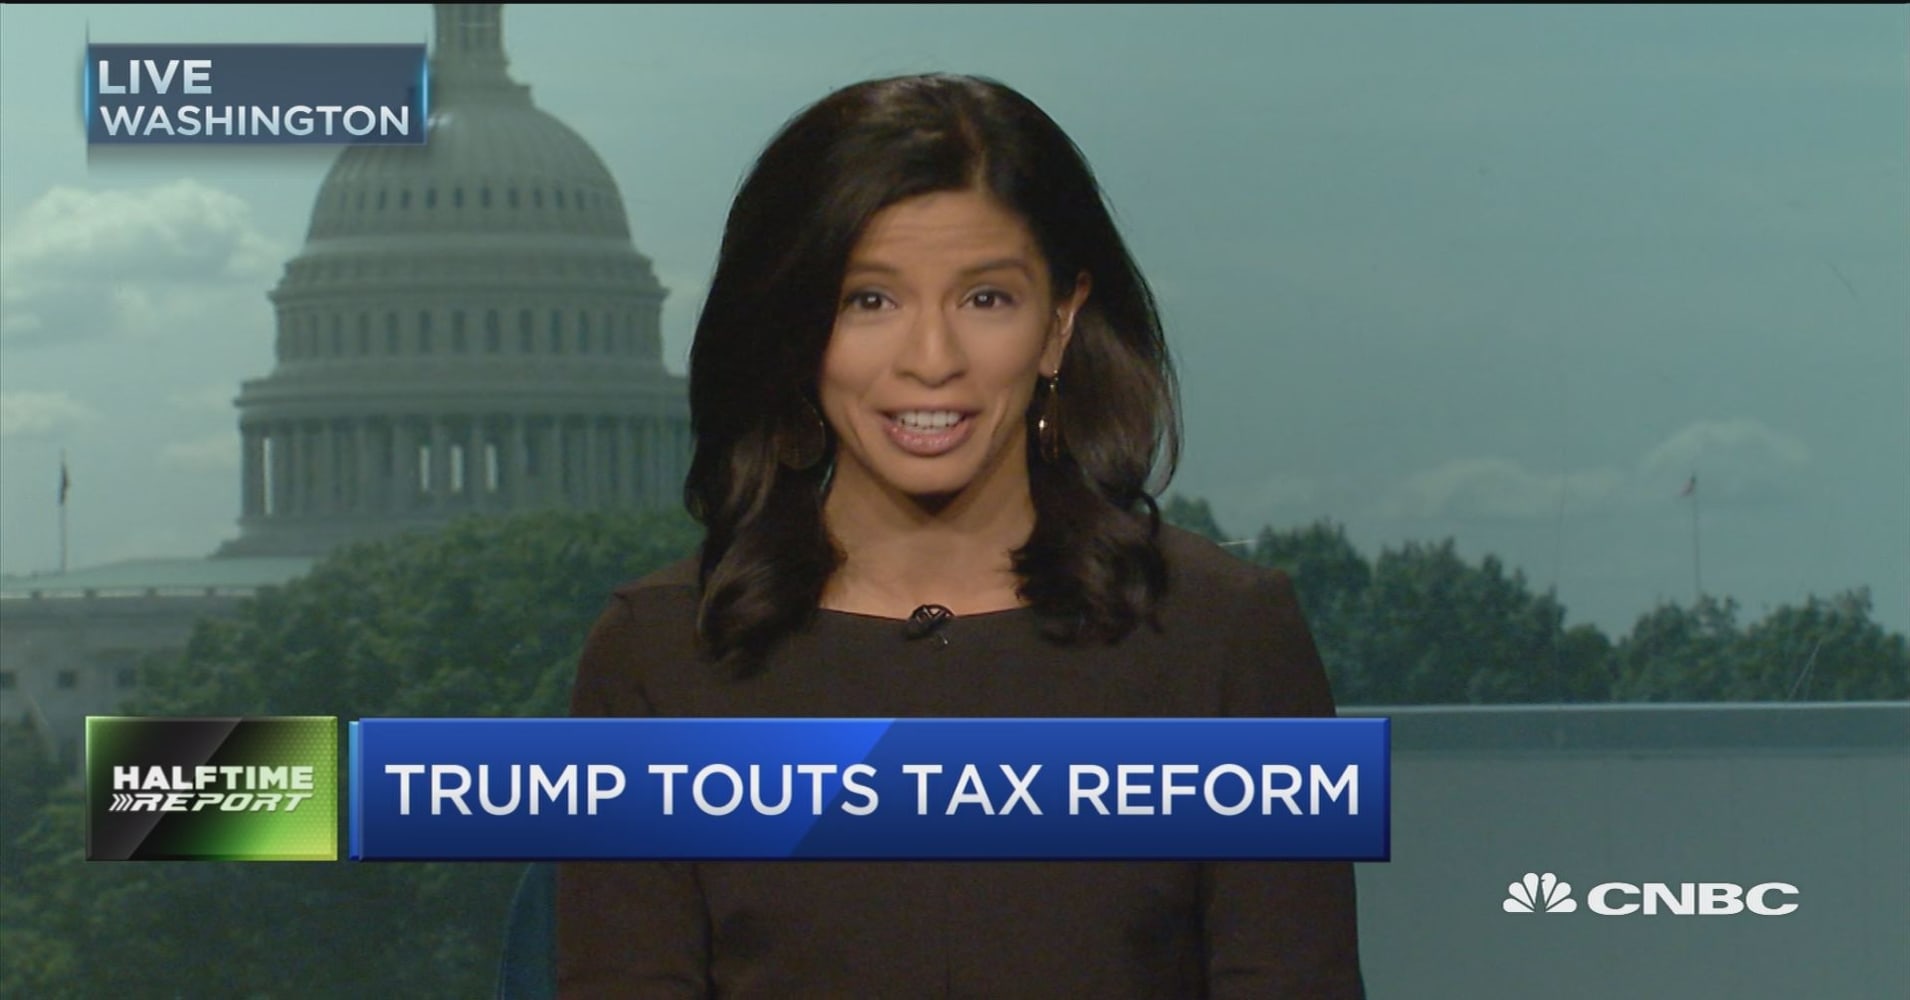 President Trump to tout tax reform plan